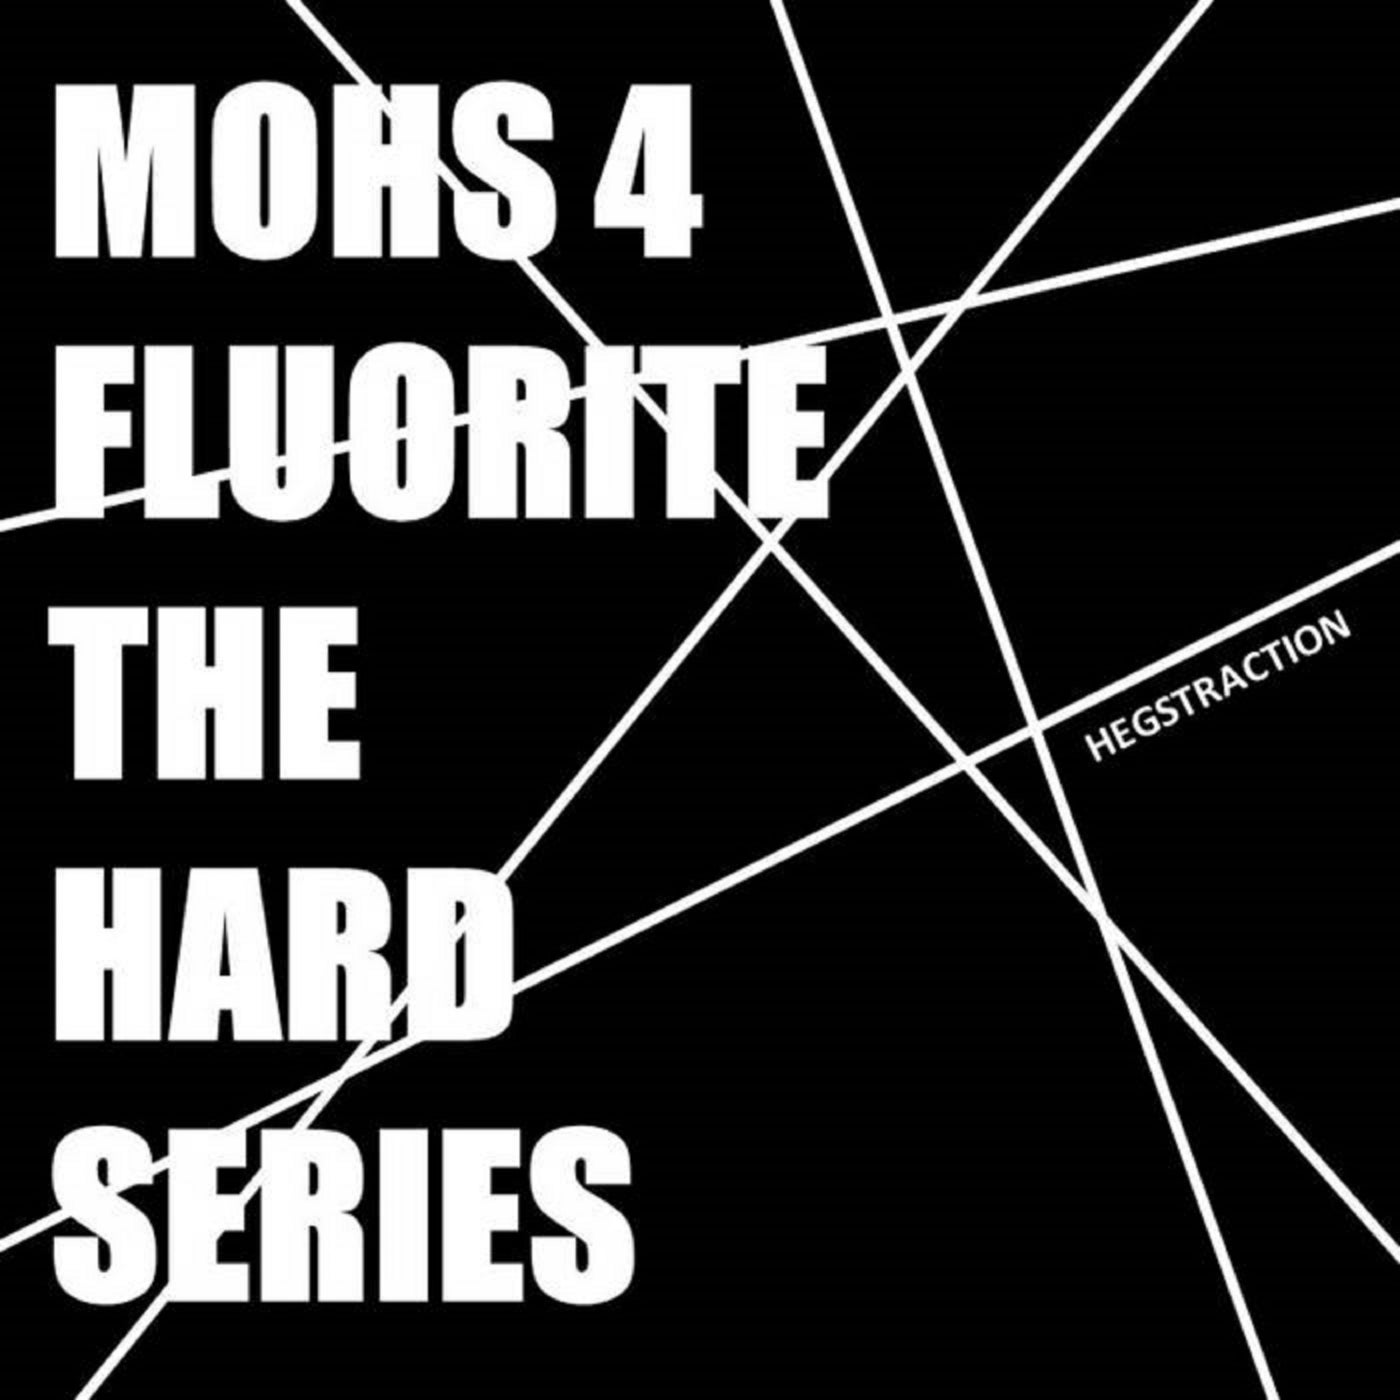 Mohs 4 Fluorite: The Hard Series